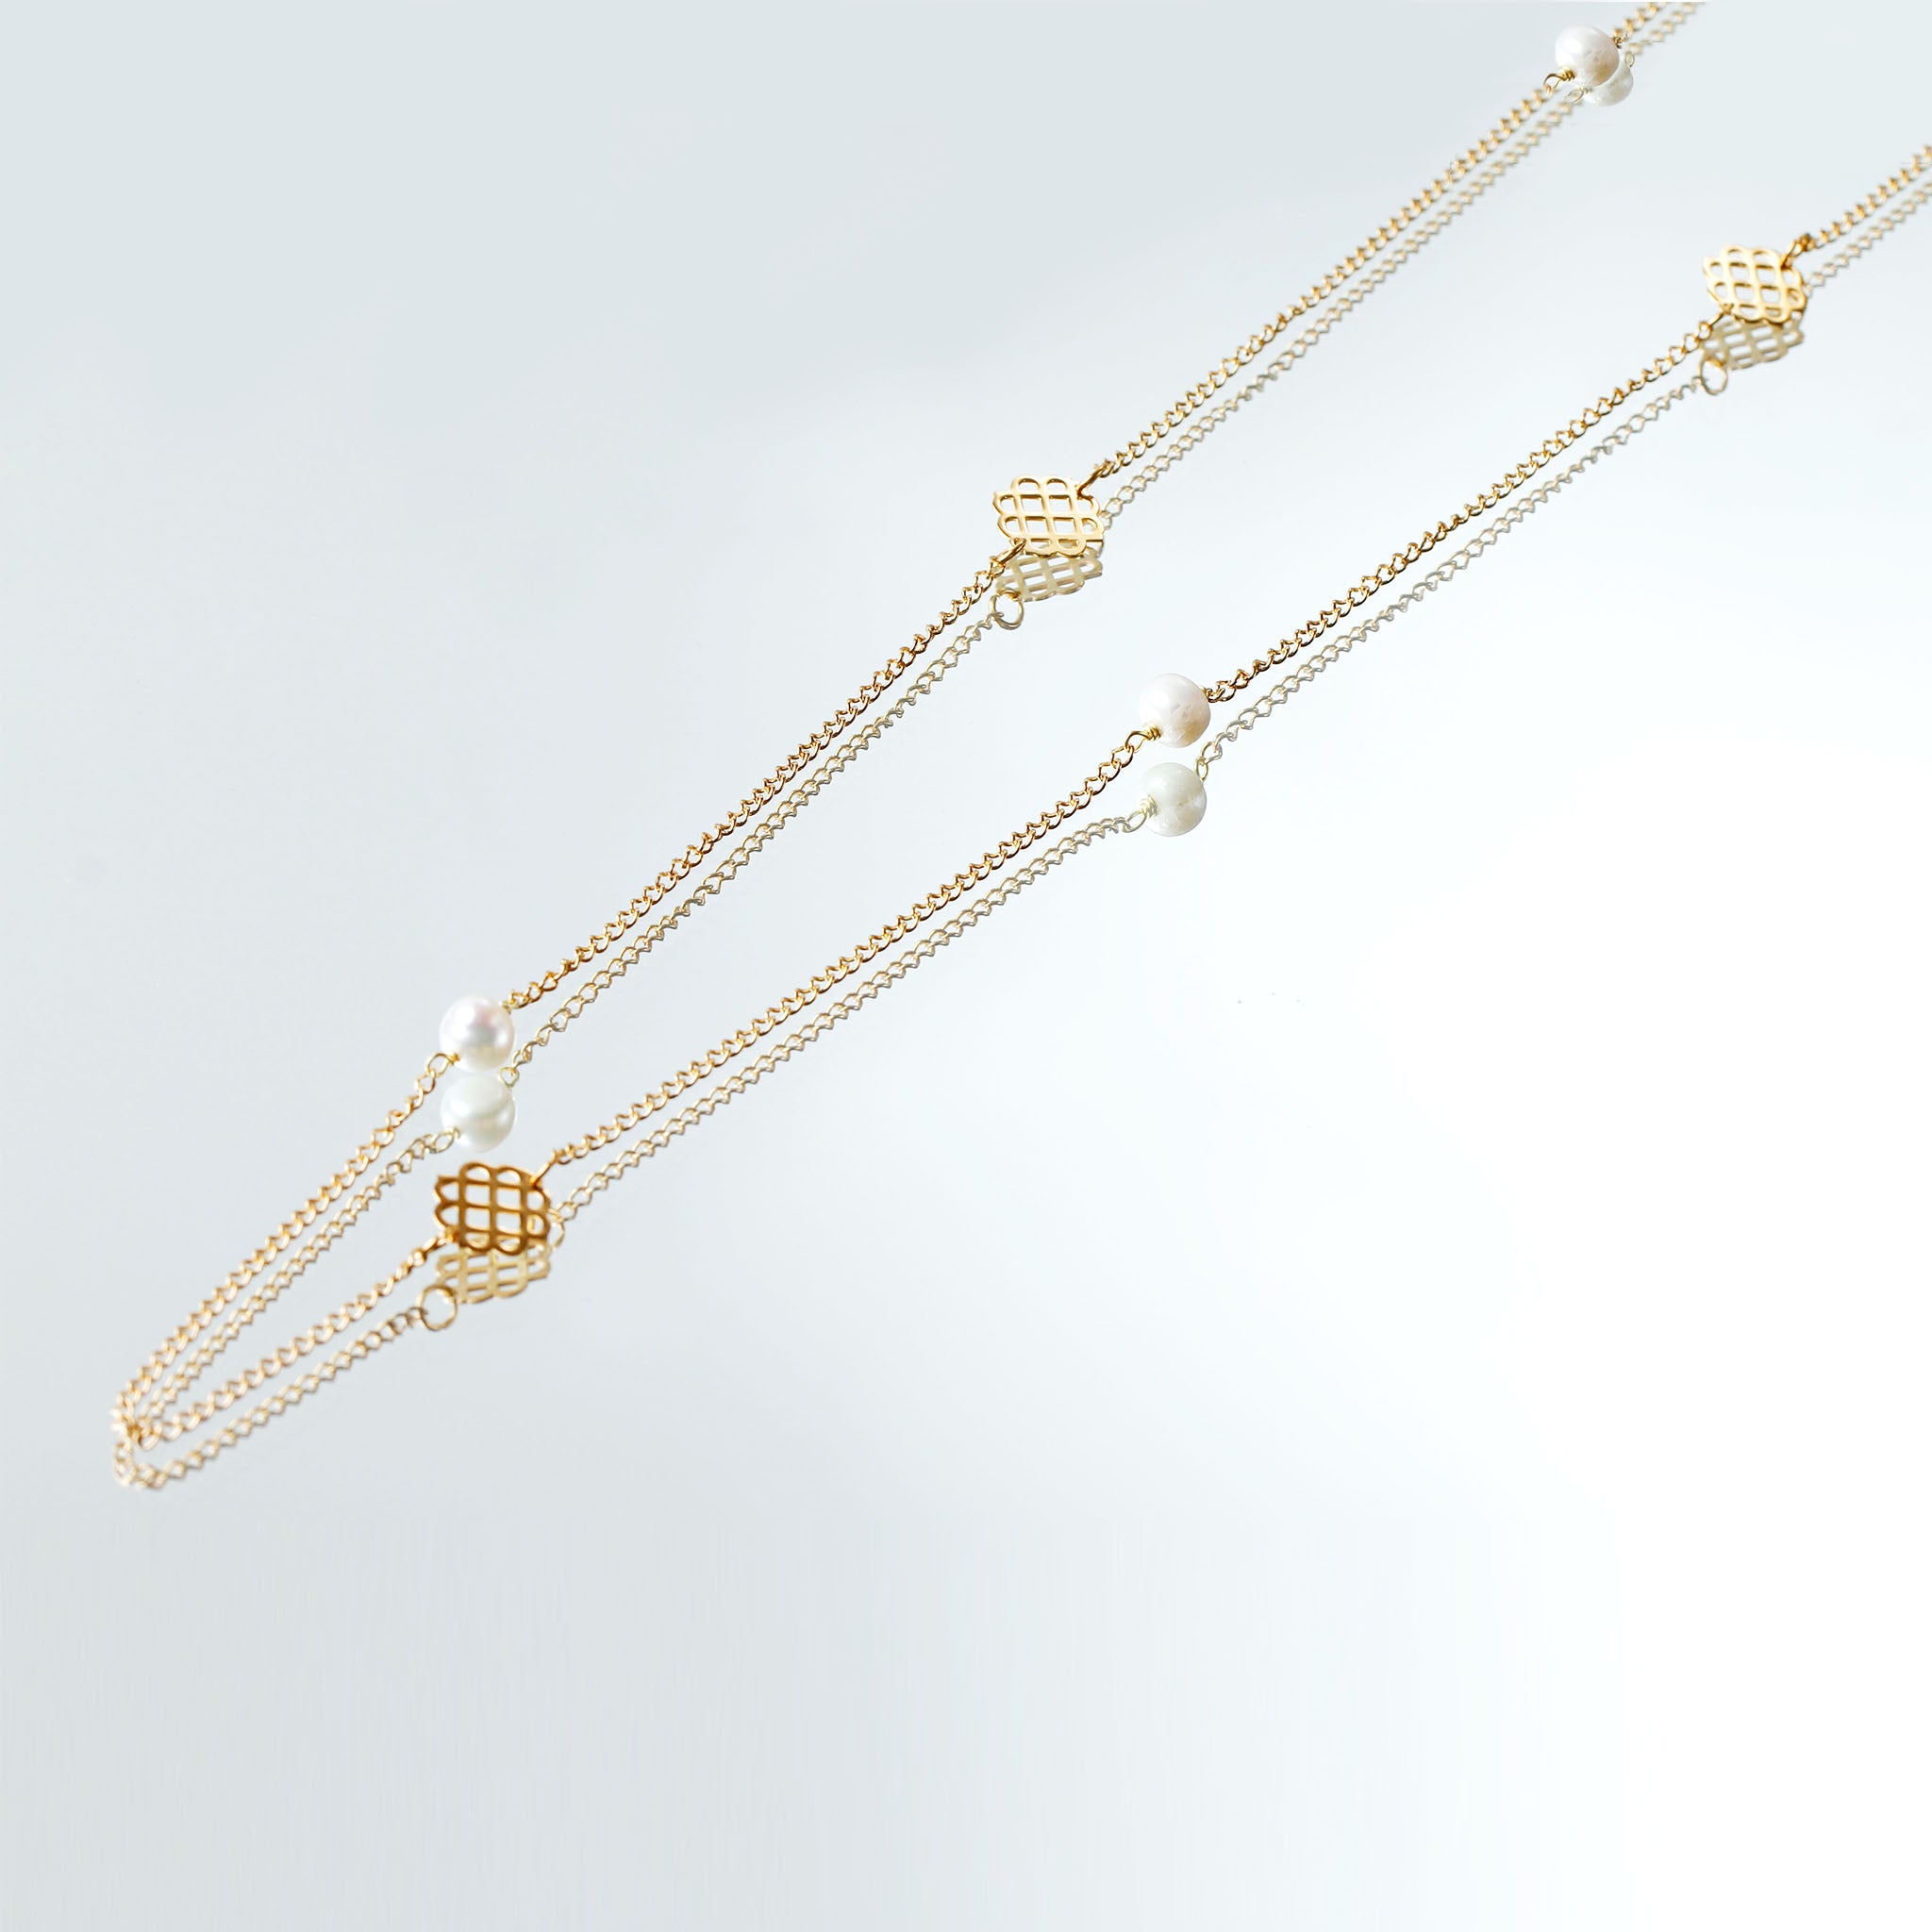 Millié Jewelry - Millié Jewelry - Millié Seis Long Necklace - Collares - Diseño Mexicano - Hecho en México